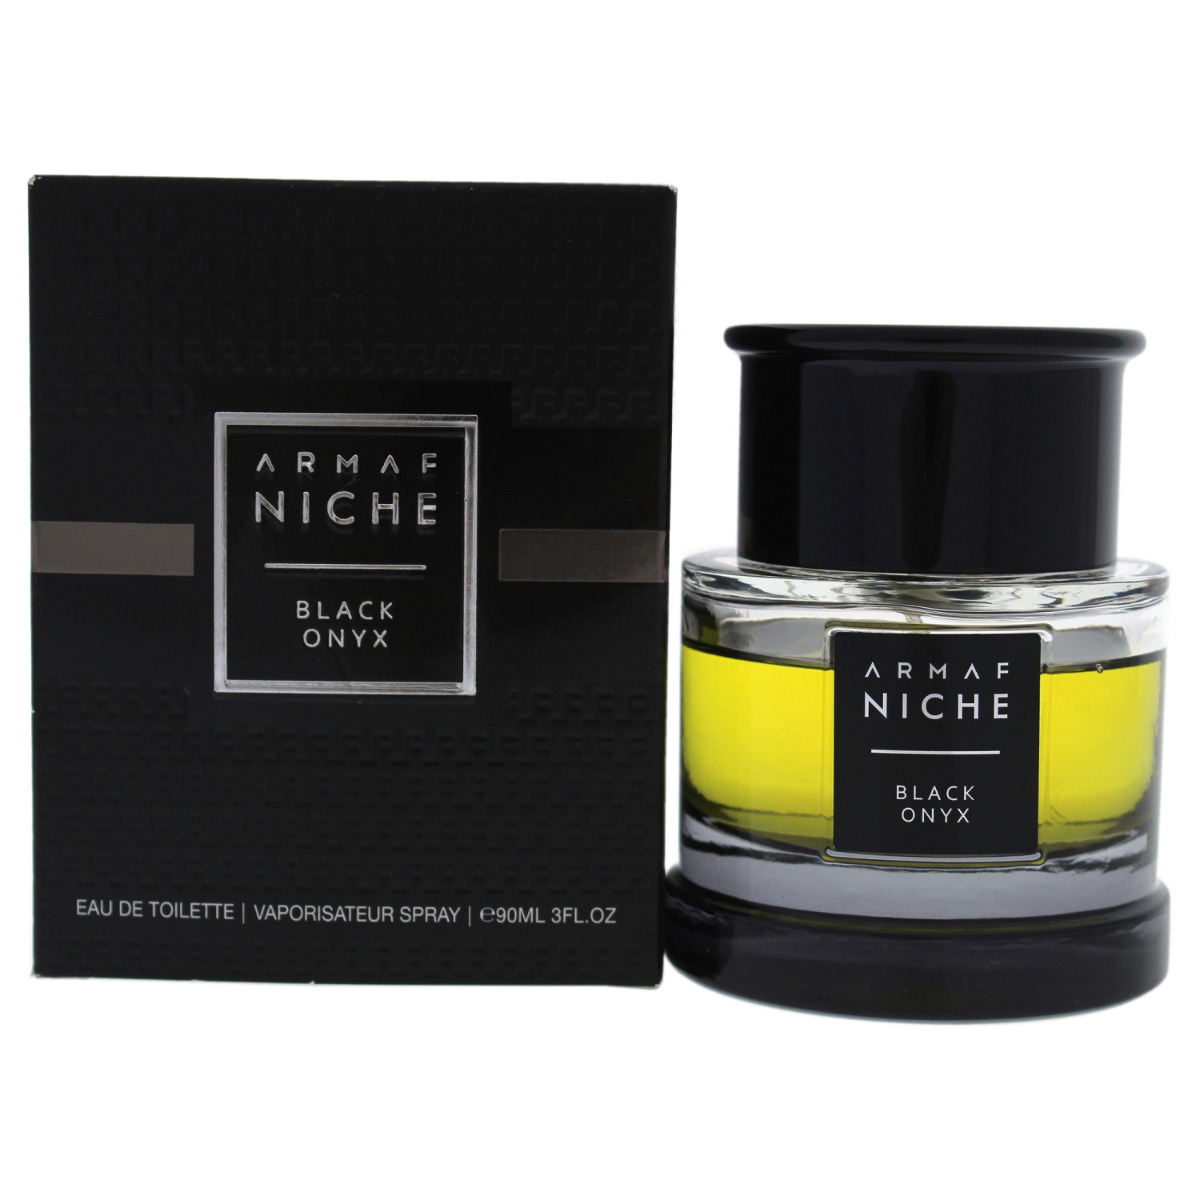 Niche Black Onyx Armaf Perfume